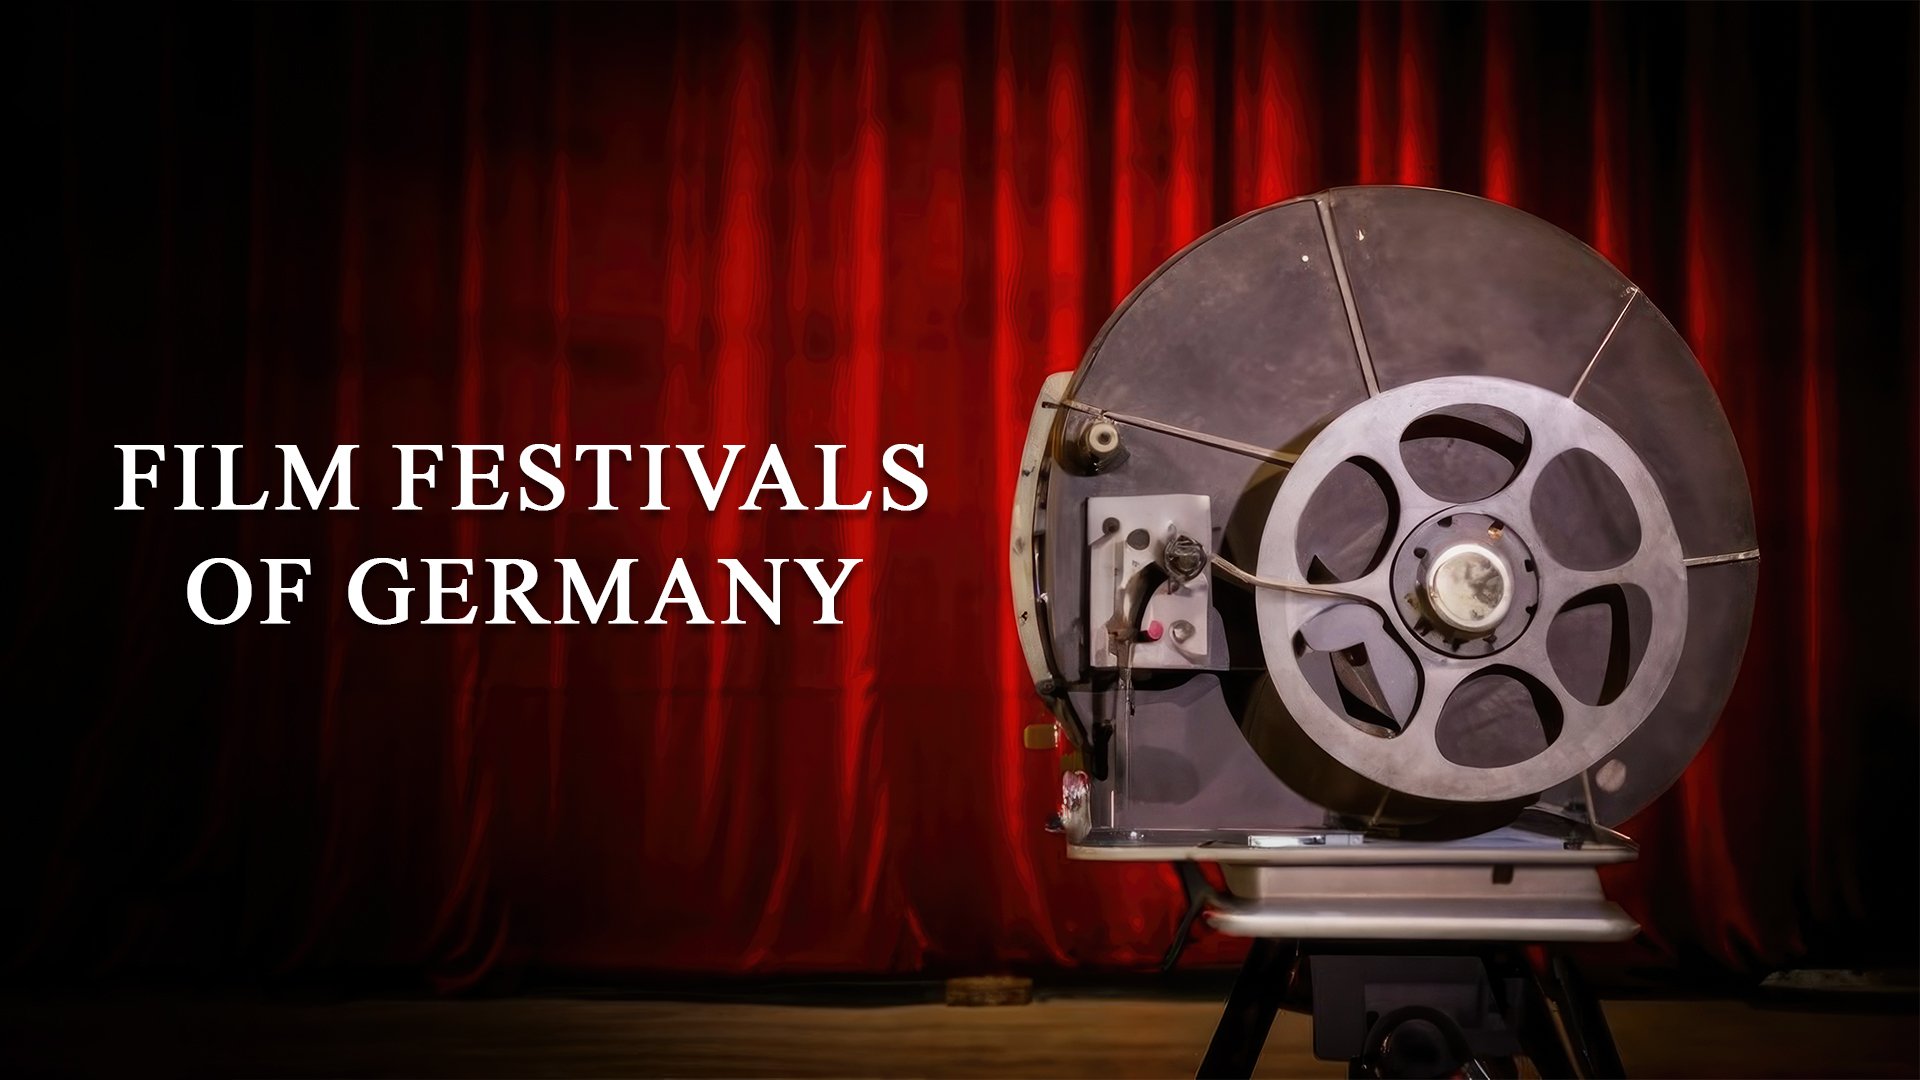 List of Film Festivals of Germany